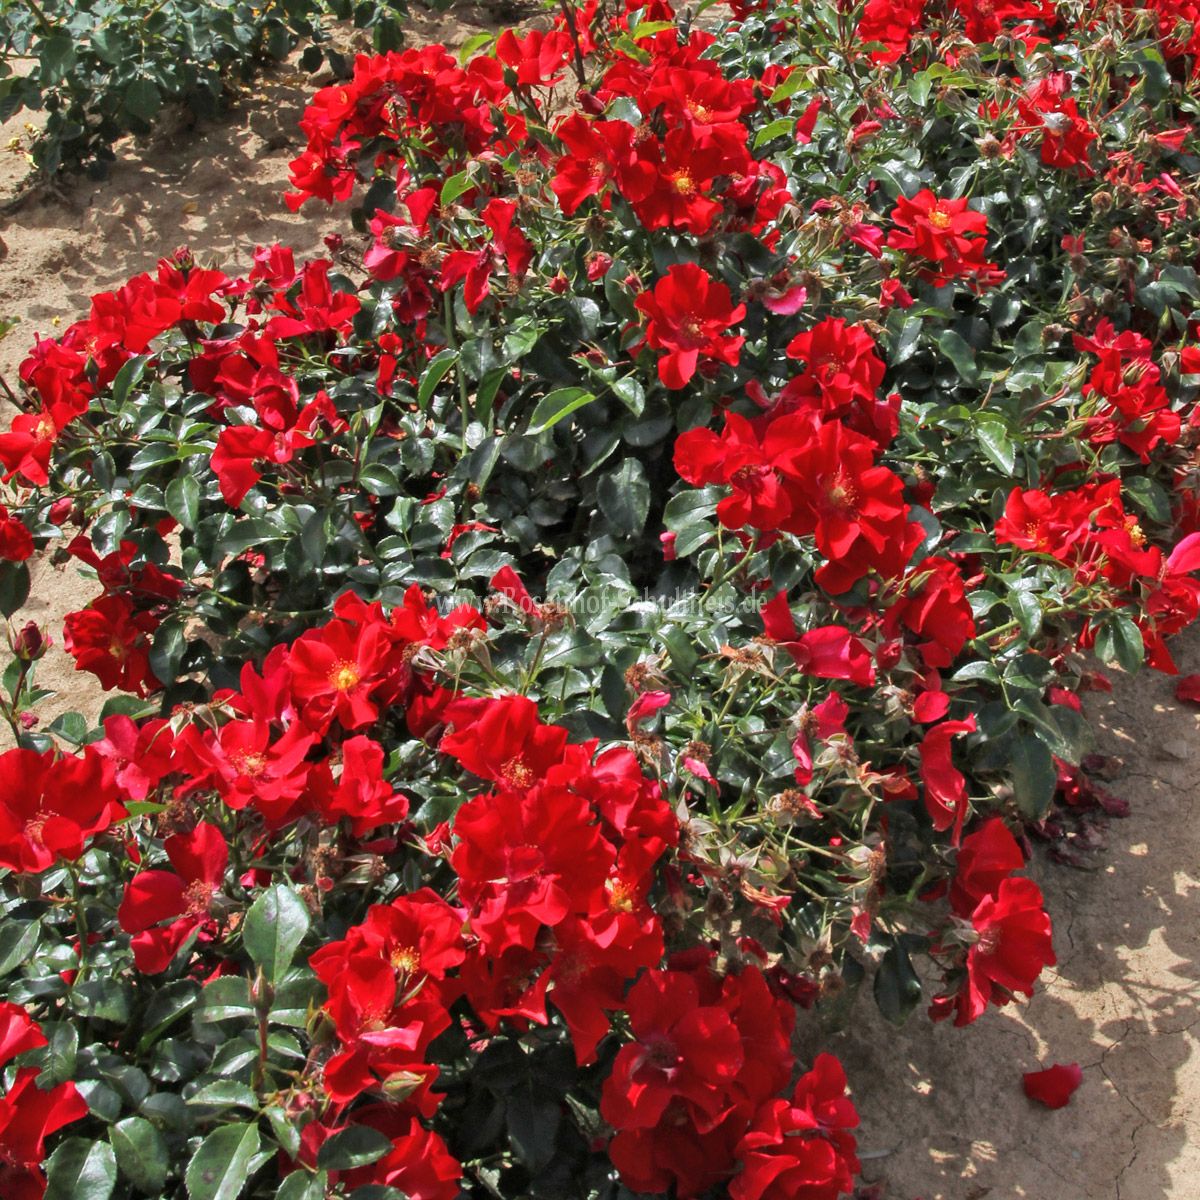 Aleksandr von Humboldt роза